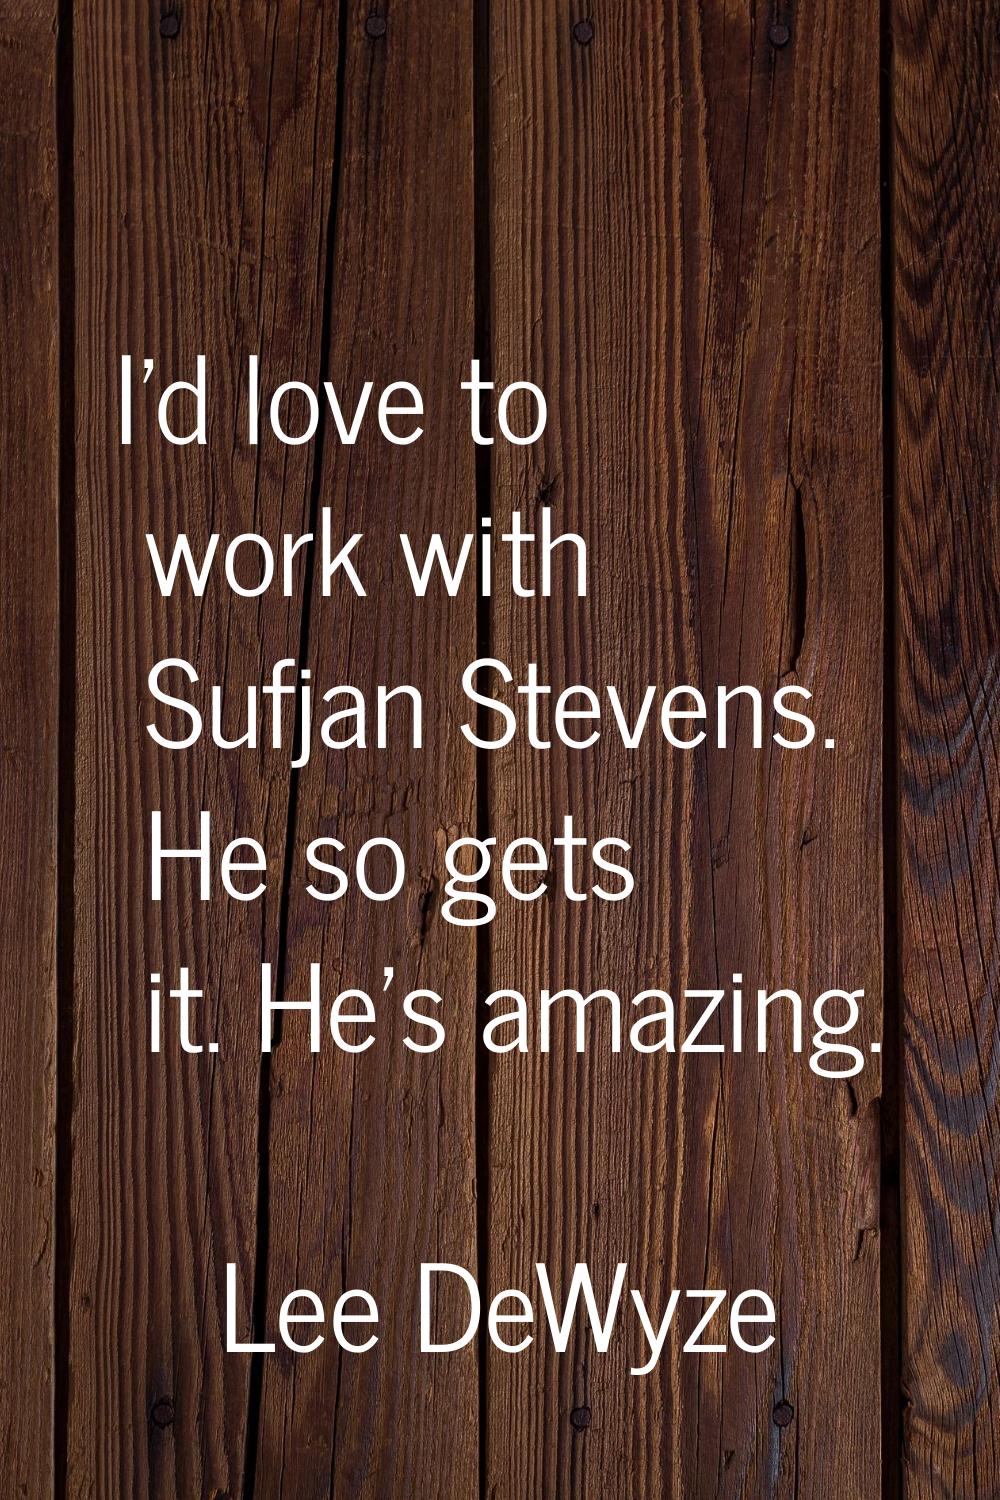 I'd love to work with Sufjan Stevens. He so gets it. He's amazing.